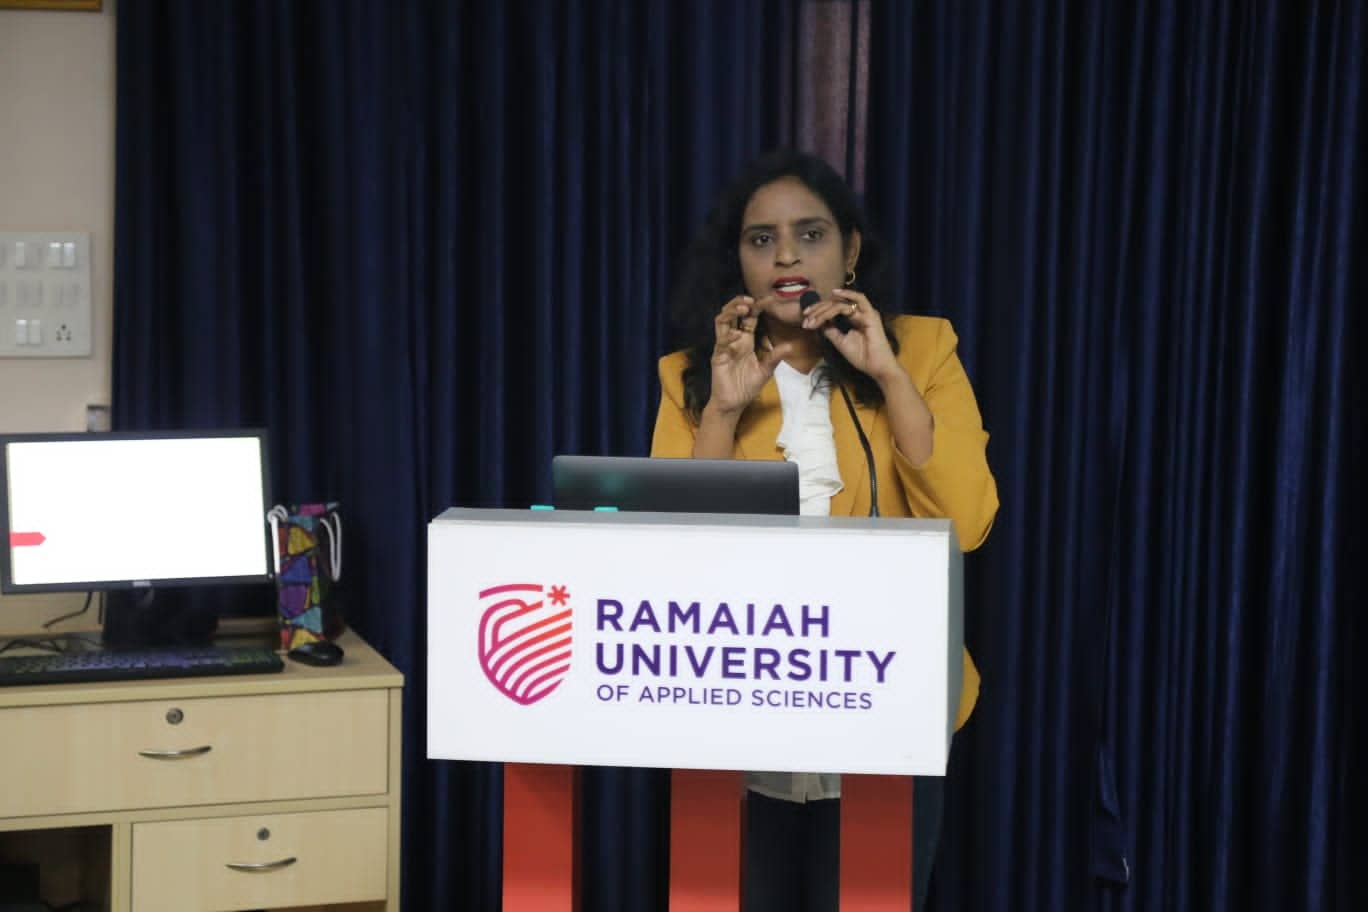 Workshop on Data Science to Ramaiah university students